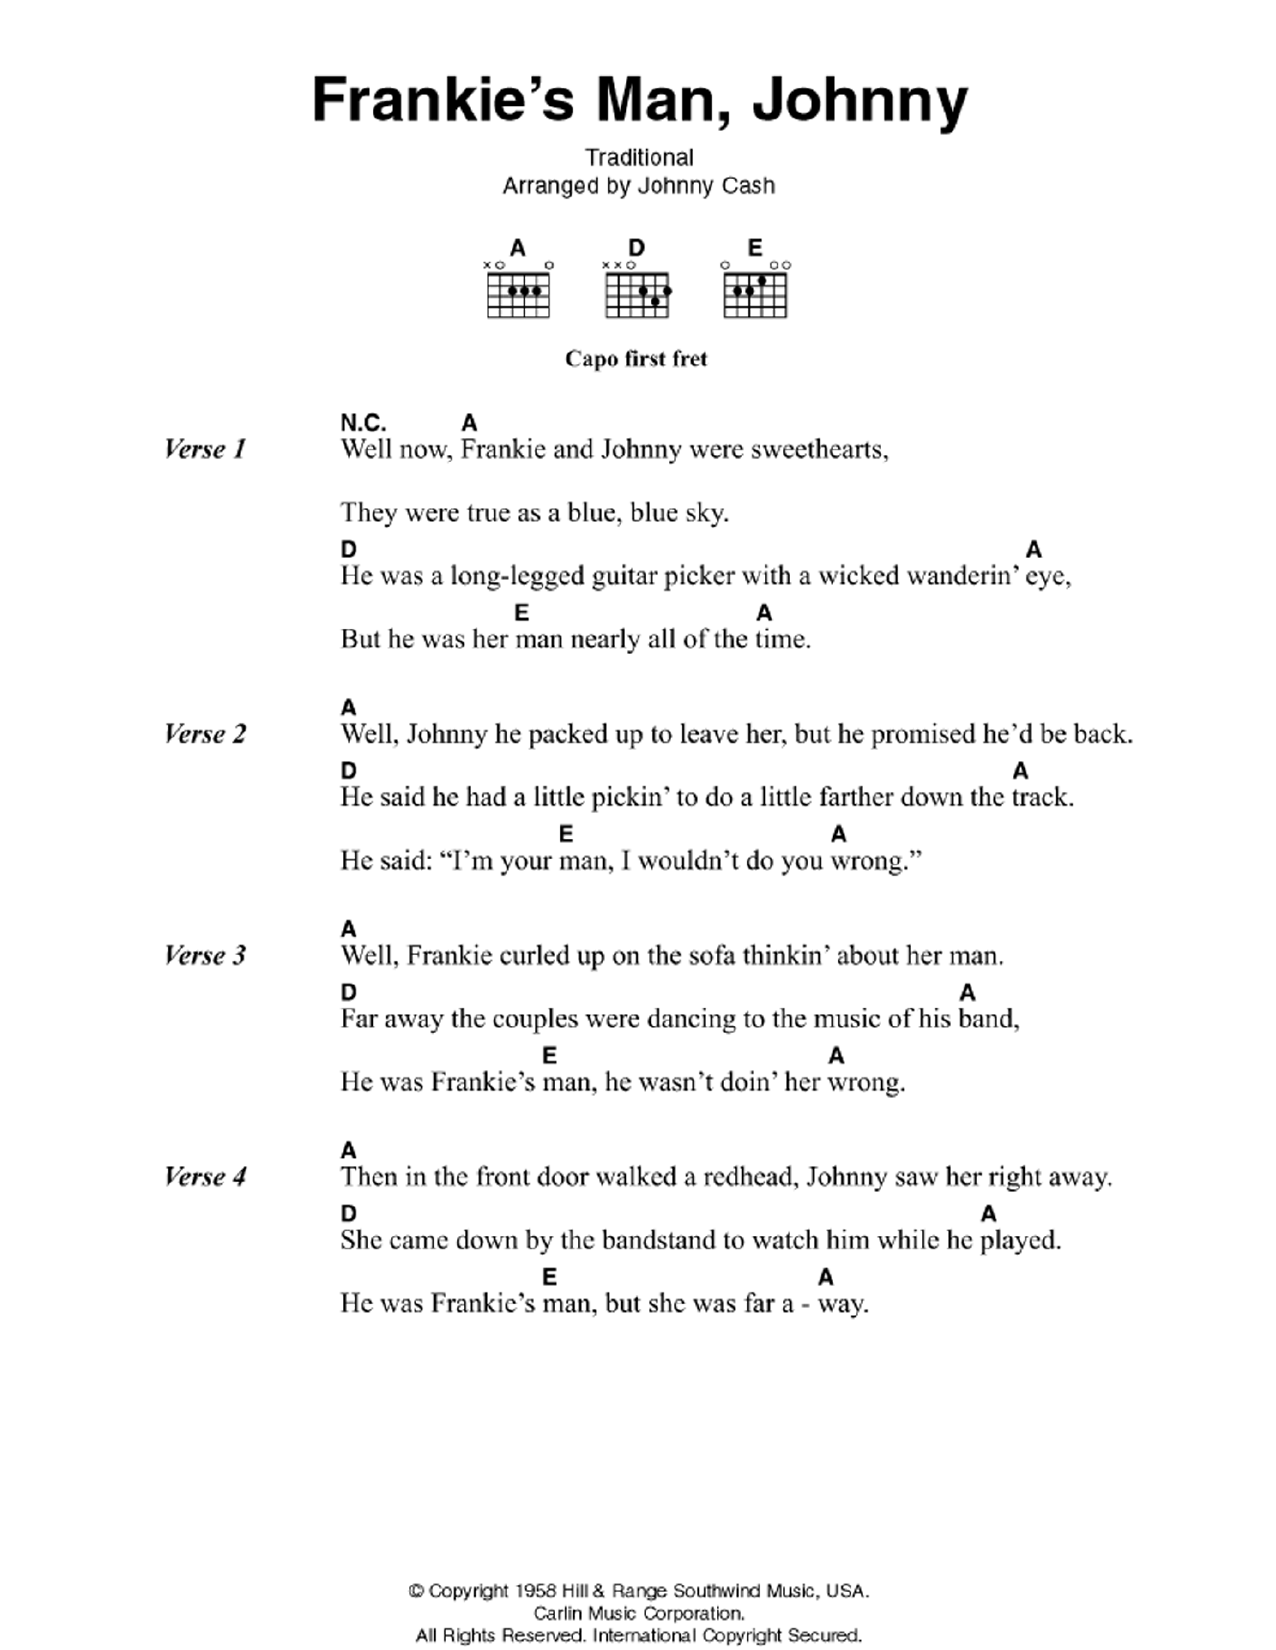 Johnny Cash Frankie's Man, Johnny sheet music notes and chords arranged for Guitar Chords/Lyrics